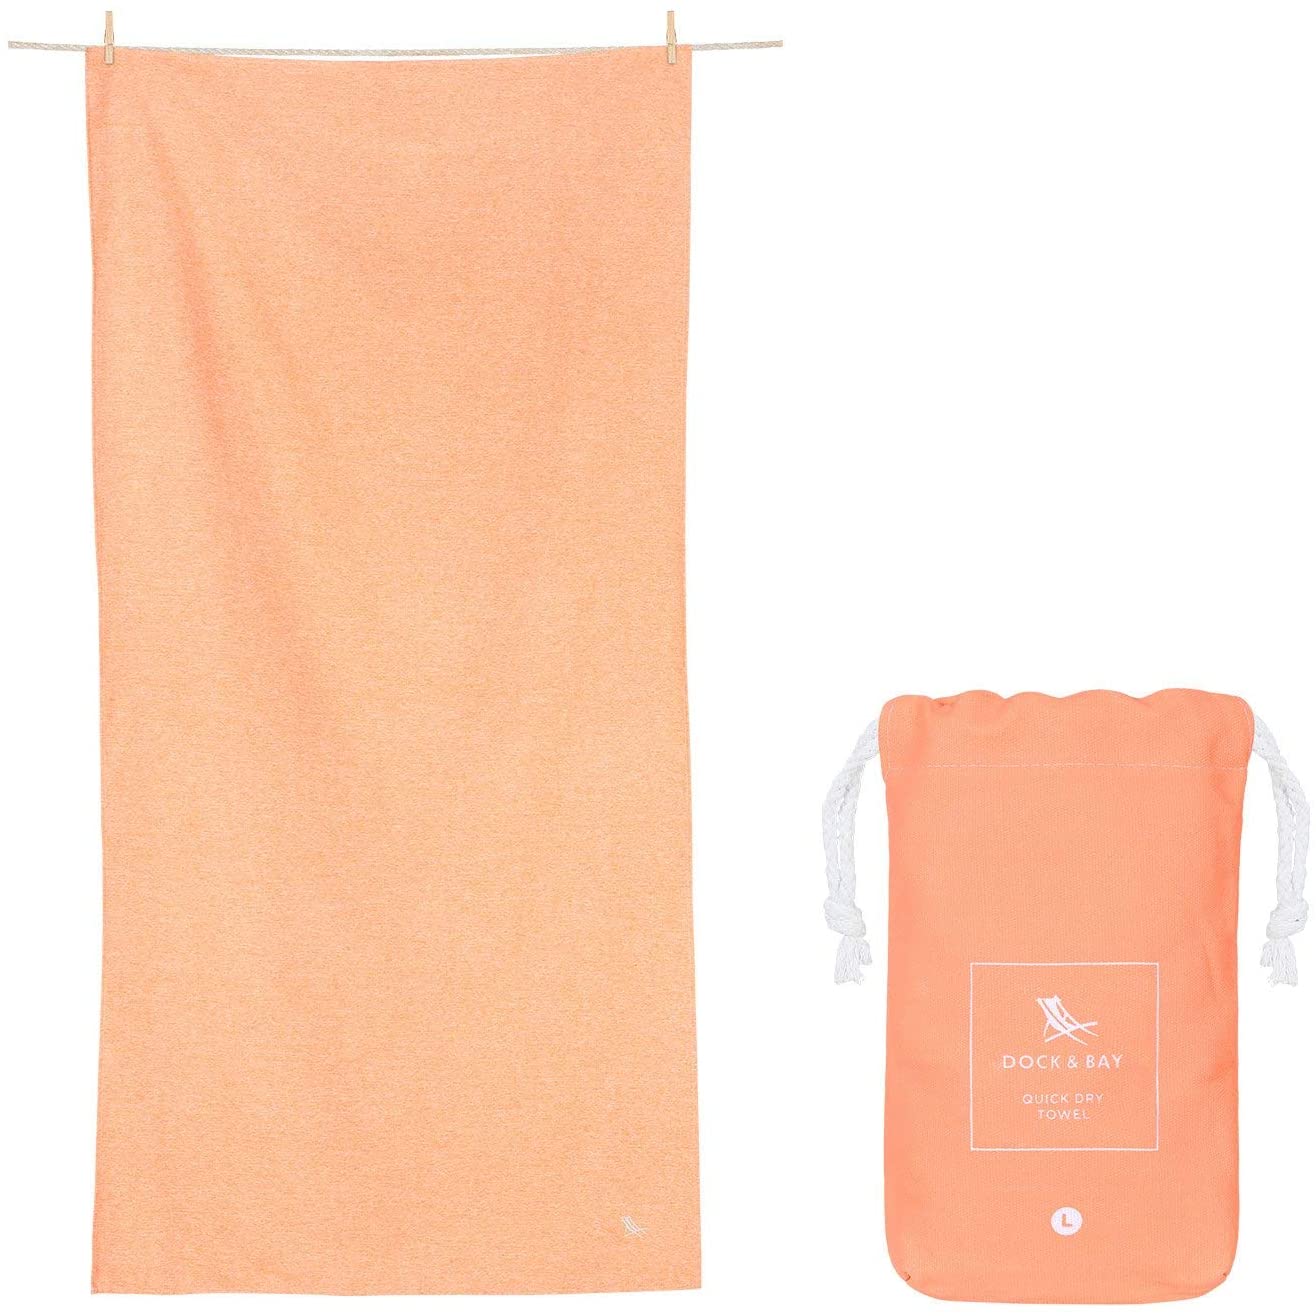 1/10 scale accessories beach towels